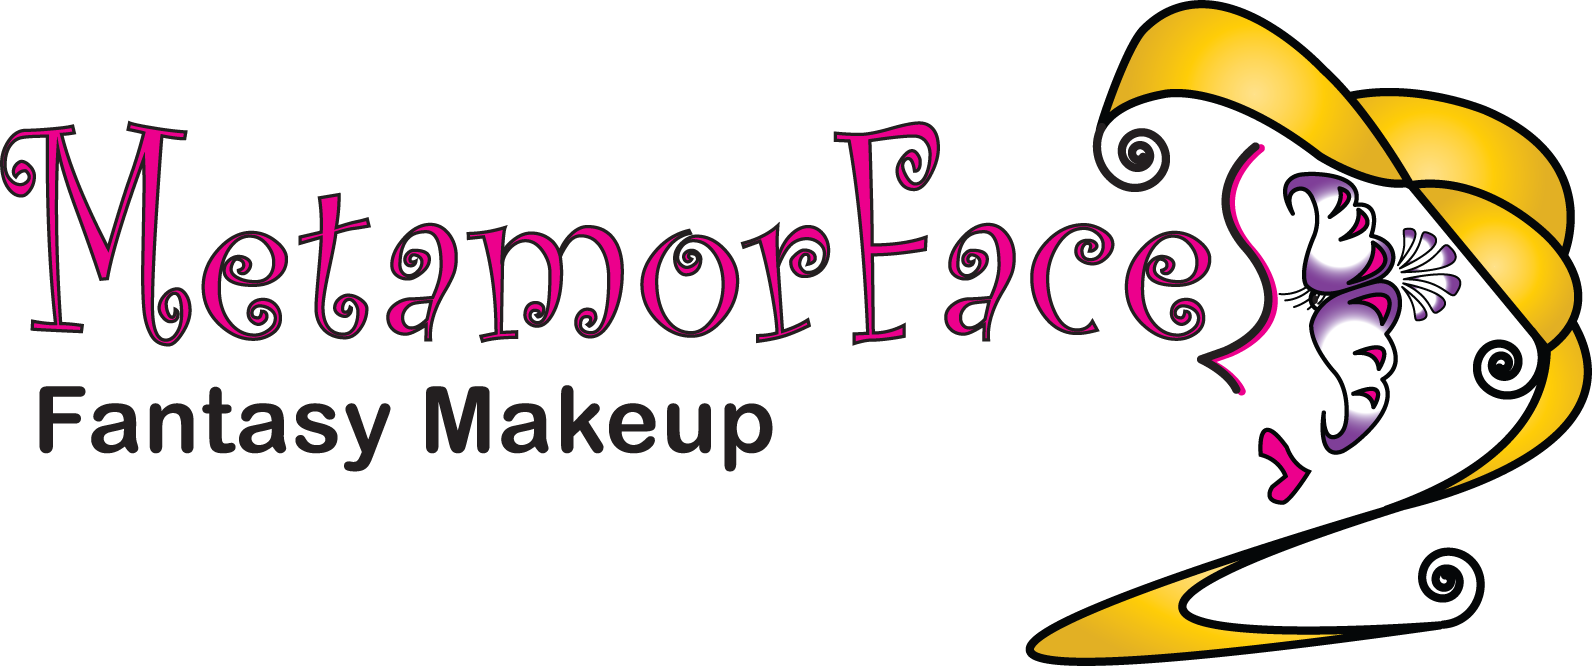 Metamorfaces Fantasy Makeup